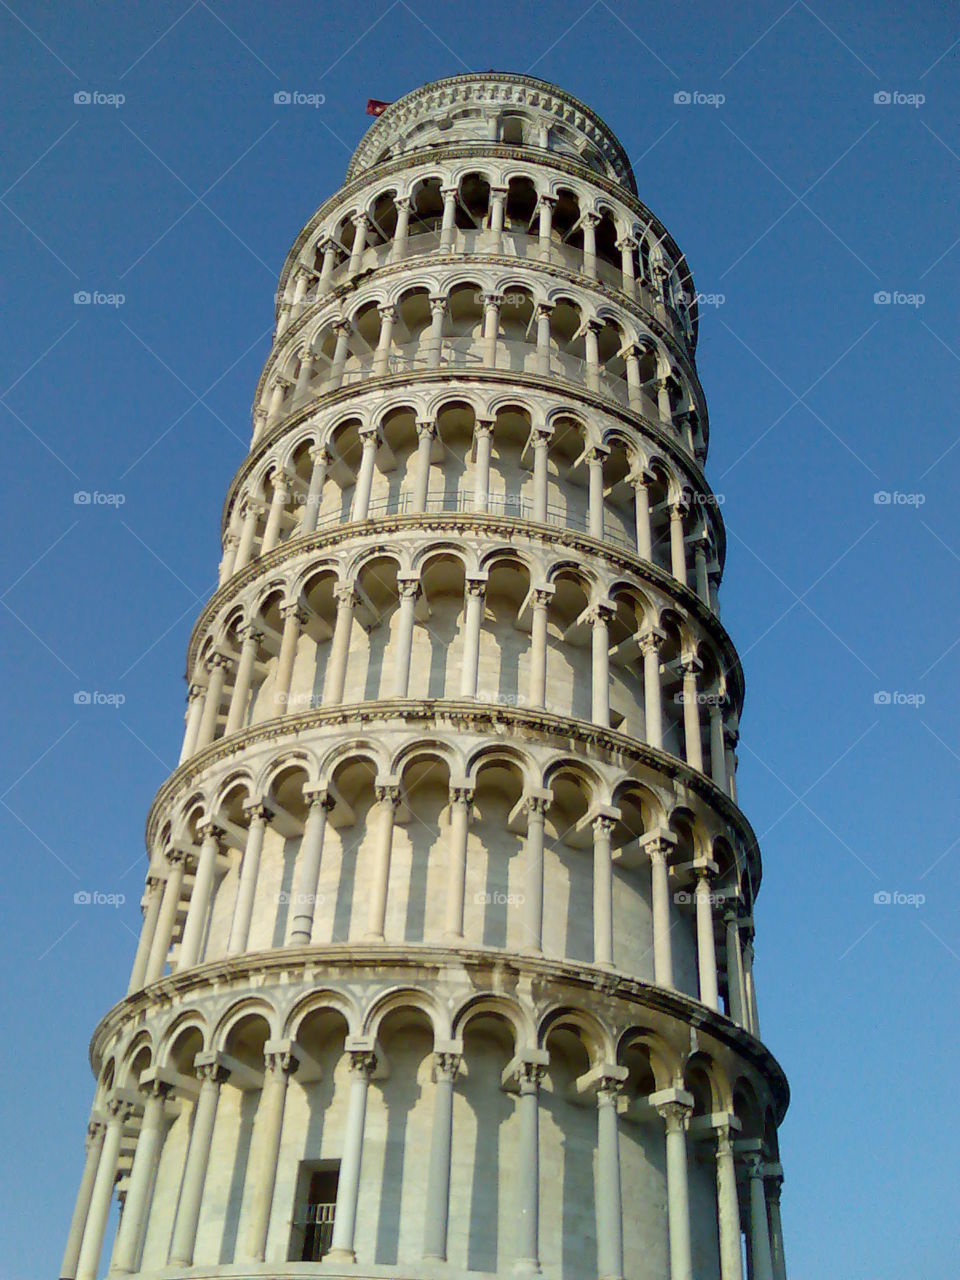 PISA TOWER 2